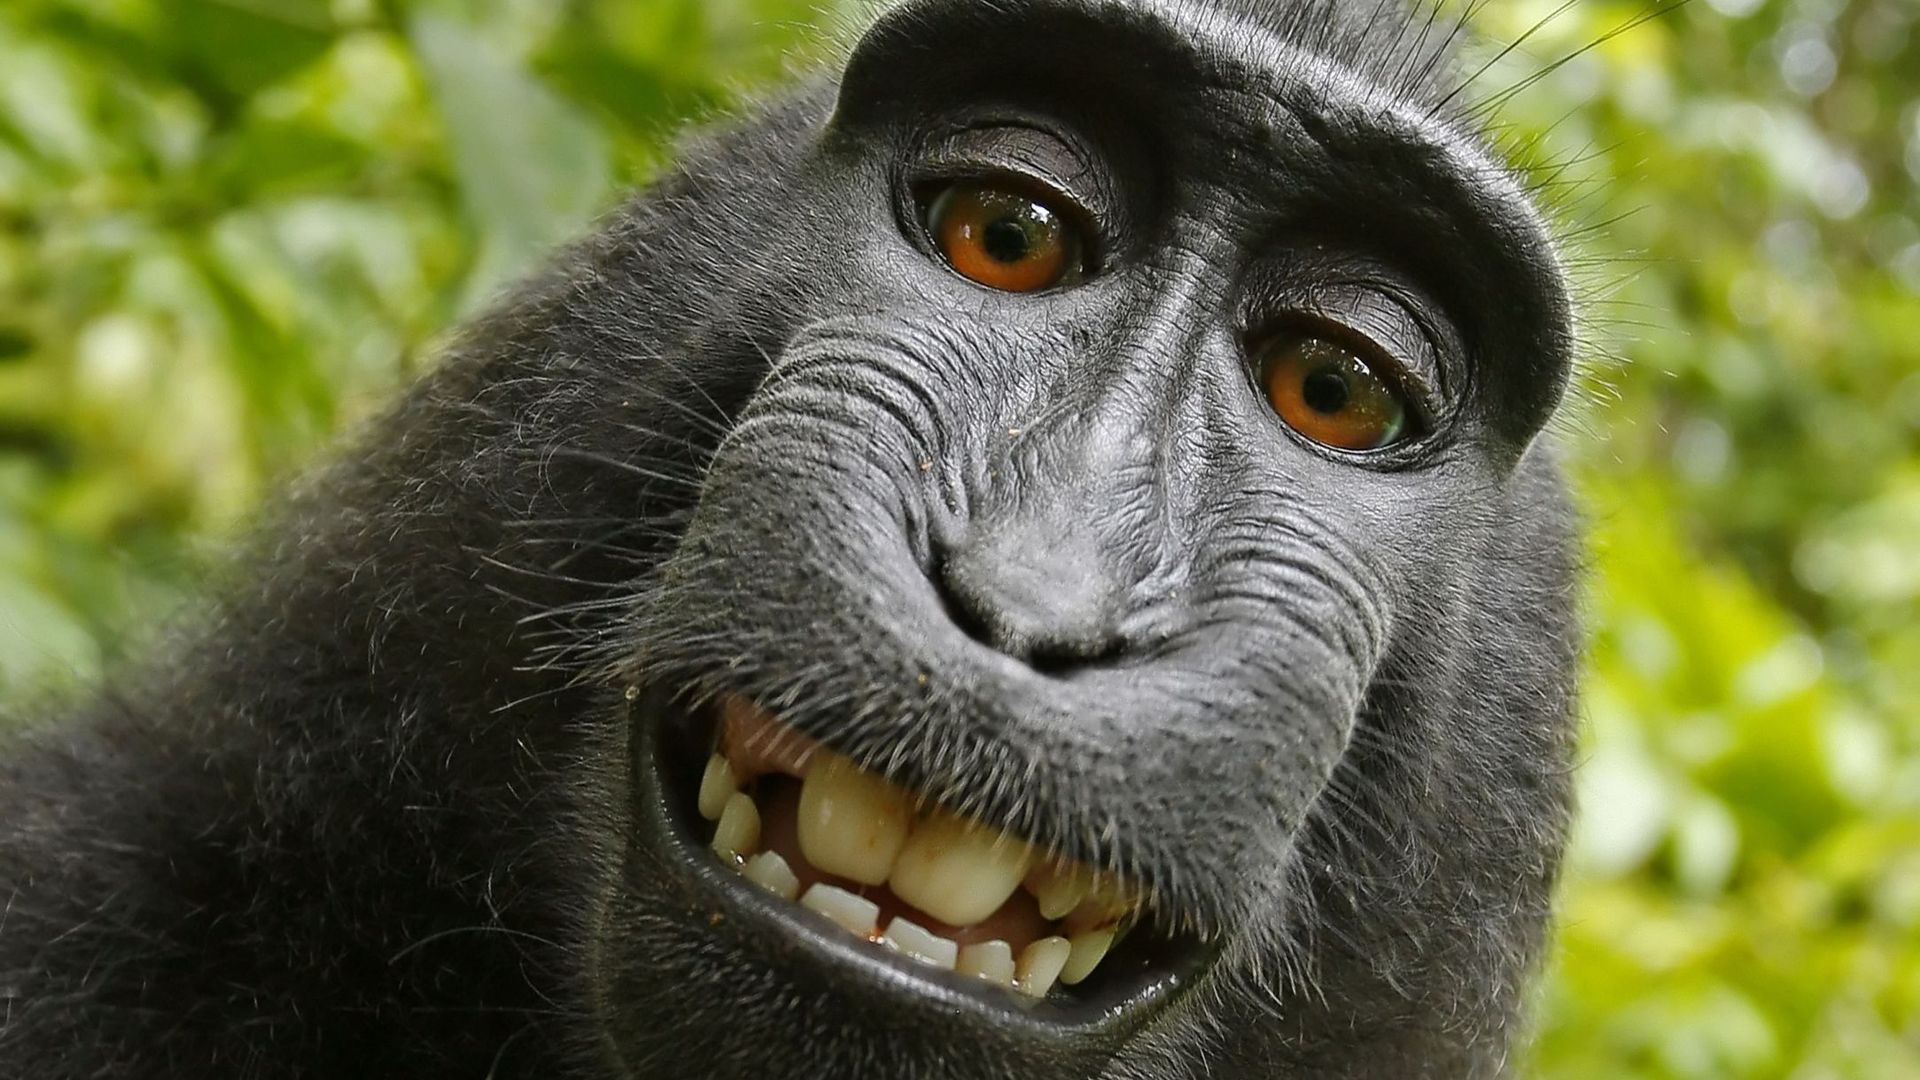 Monkey takes selfie